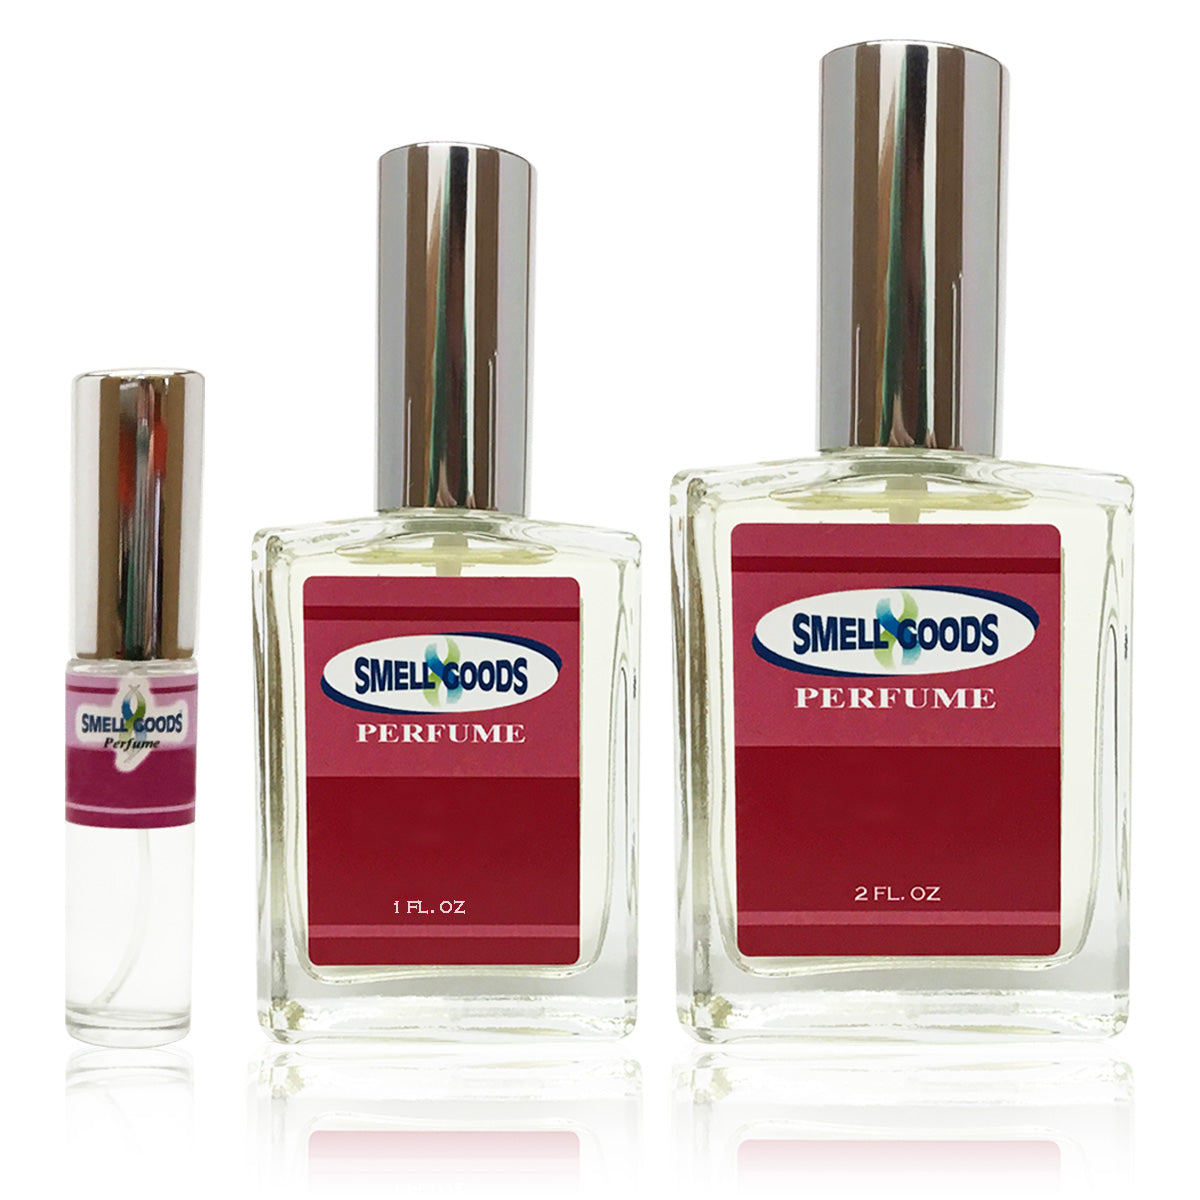 Daisy Love by Marc Jacobs Type (Women) Perfume Spray